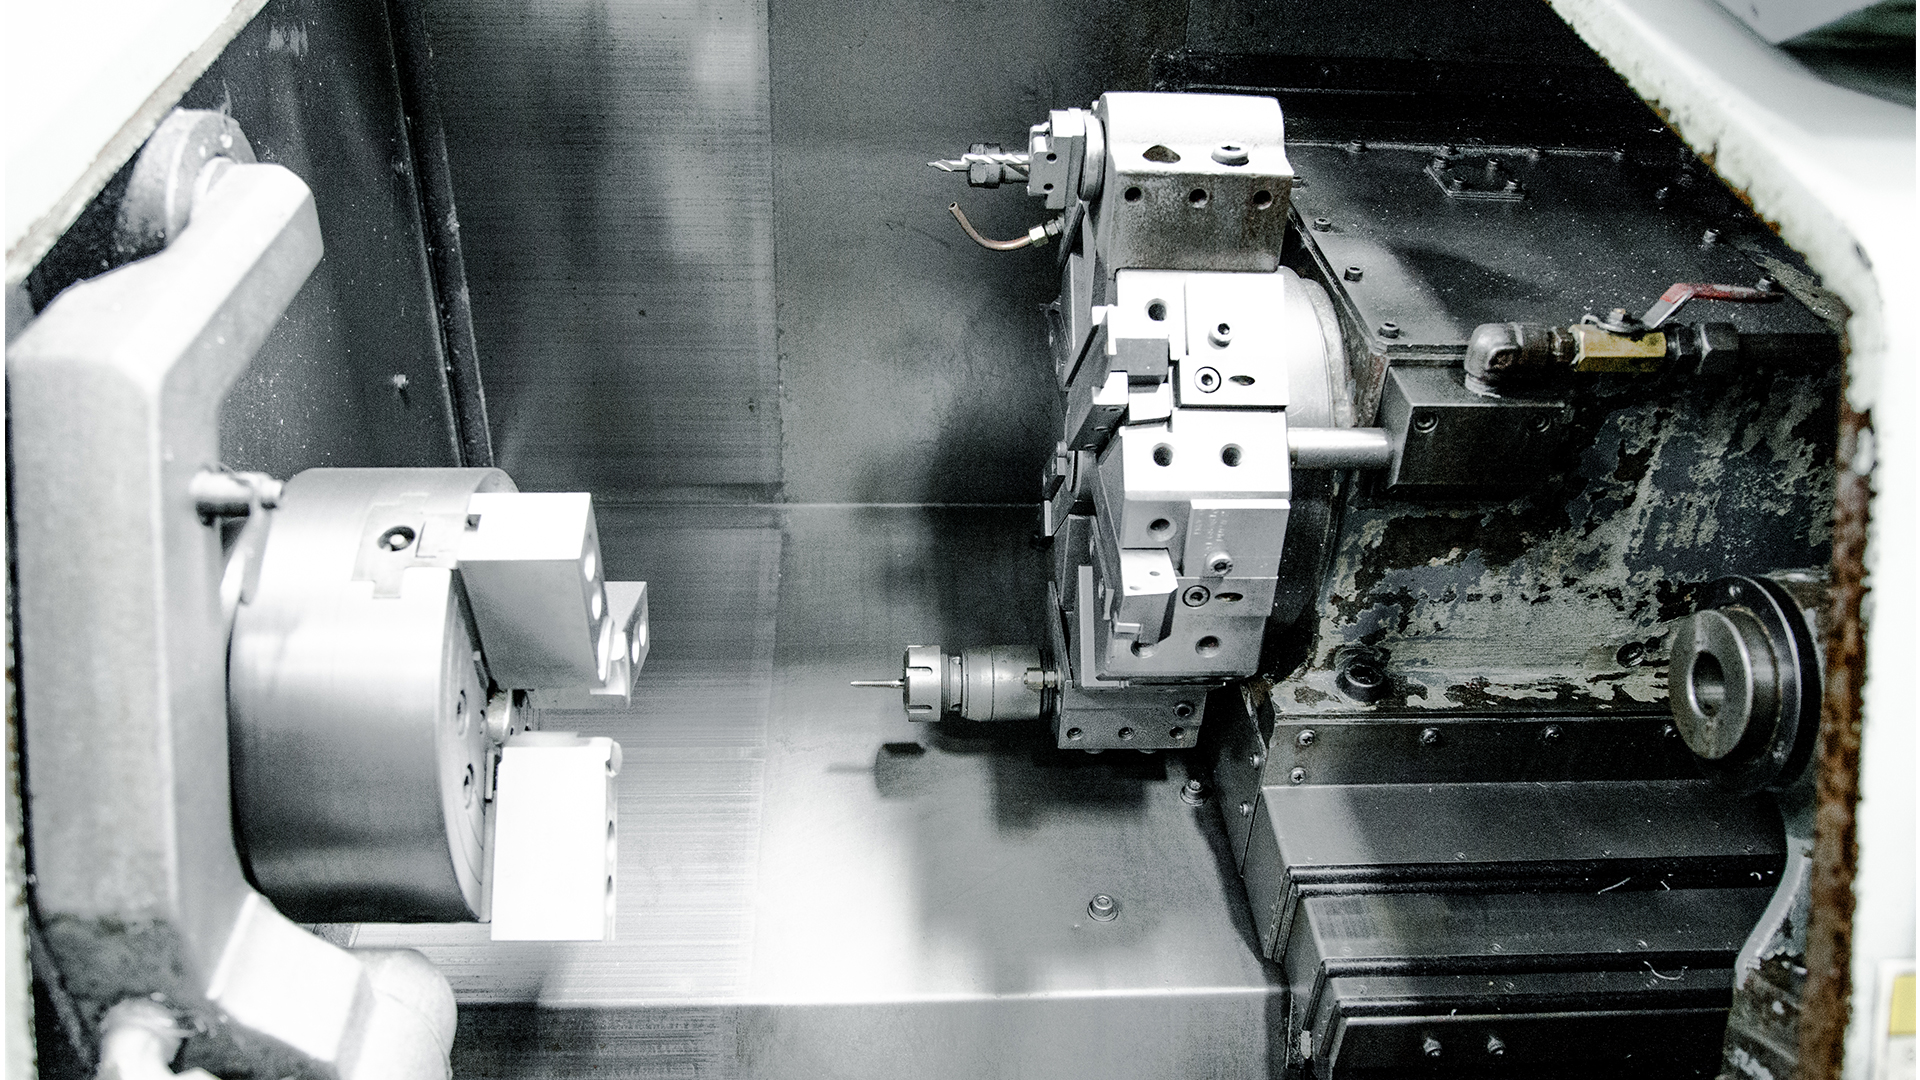 State-of-the-art CNC machine